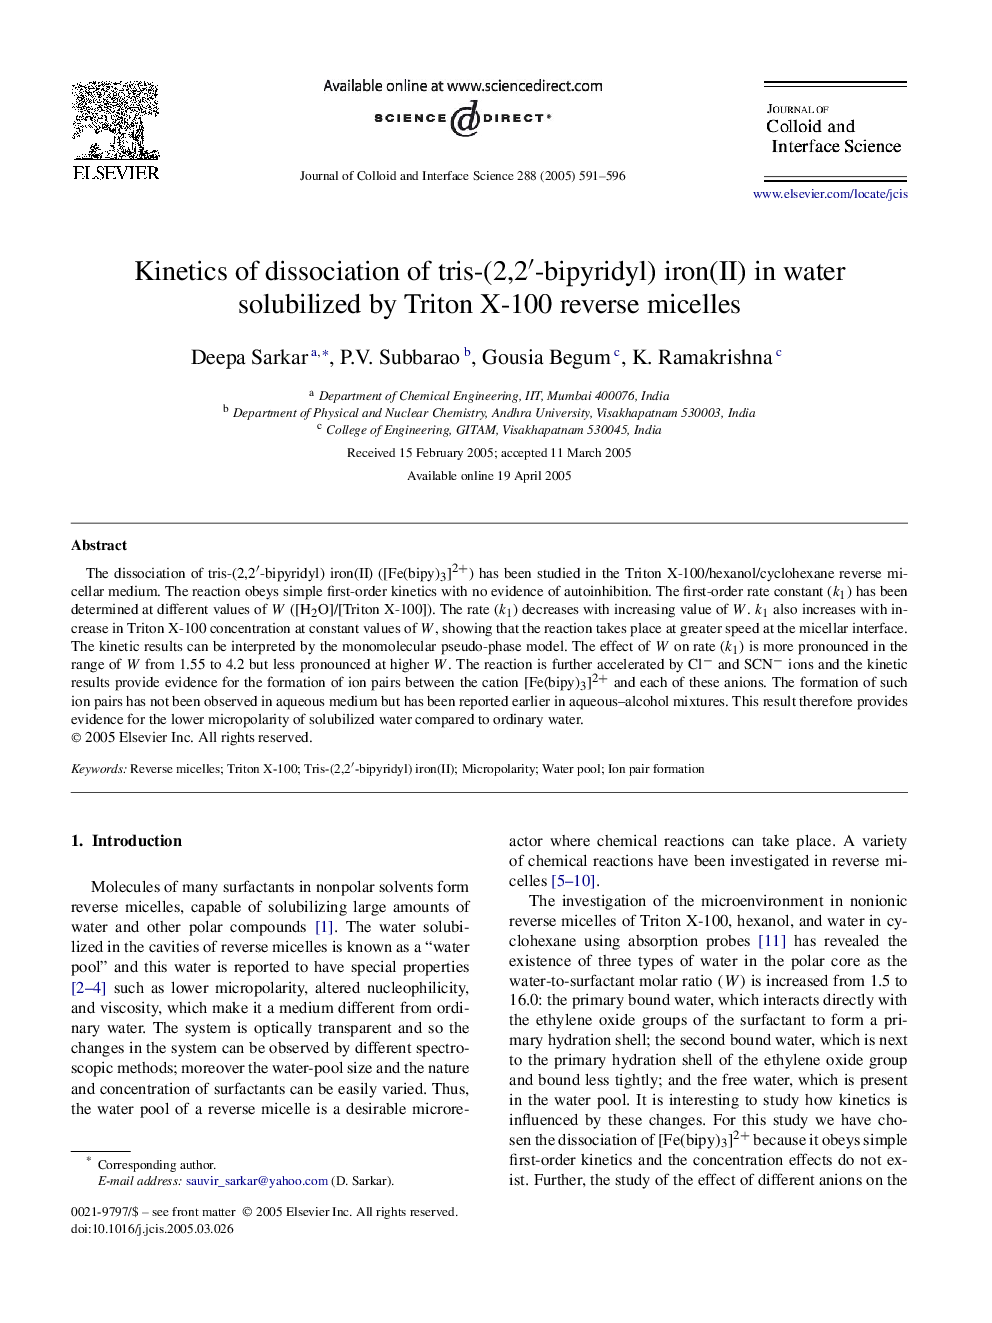 Kinetics of dissociation of tris-(2,2â²-bipyridyl) iron(II) in water solubilized by Triton X-100 reverse micelles